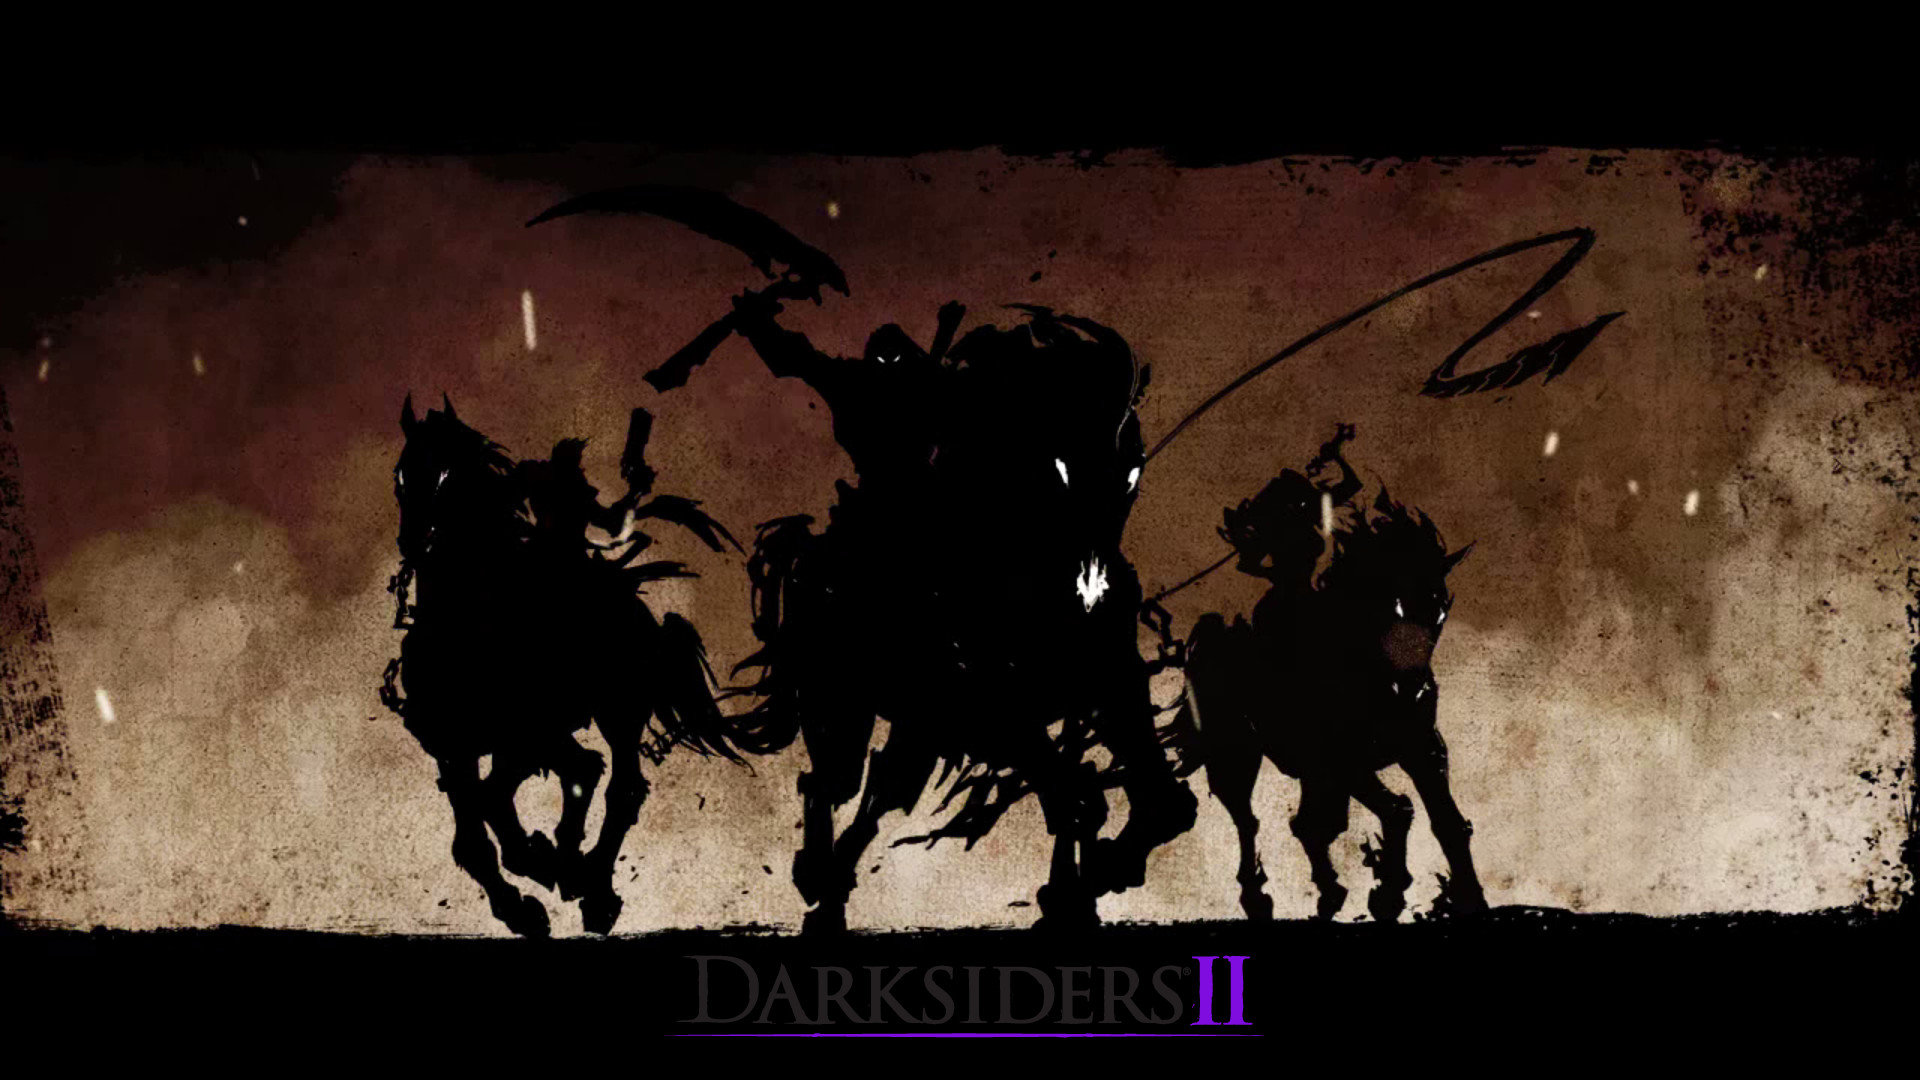 High resolution Darksiders 2 (II) 1080p wallpaper ID:466228 for desktop